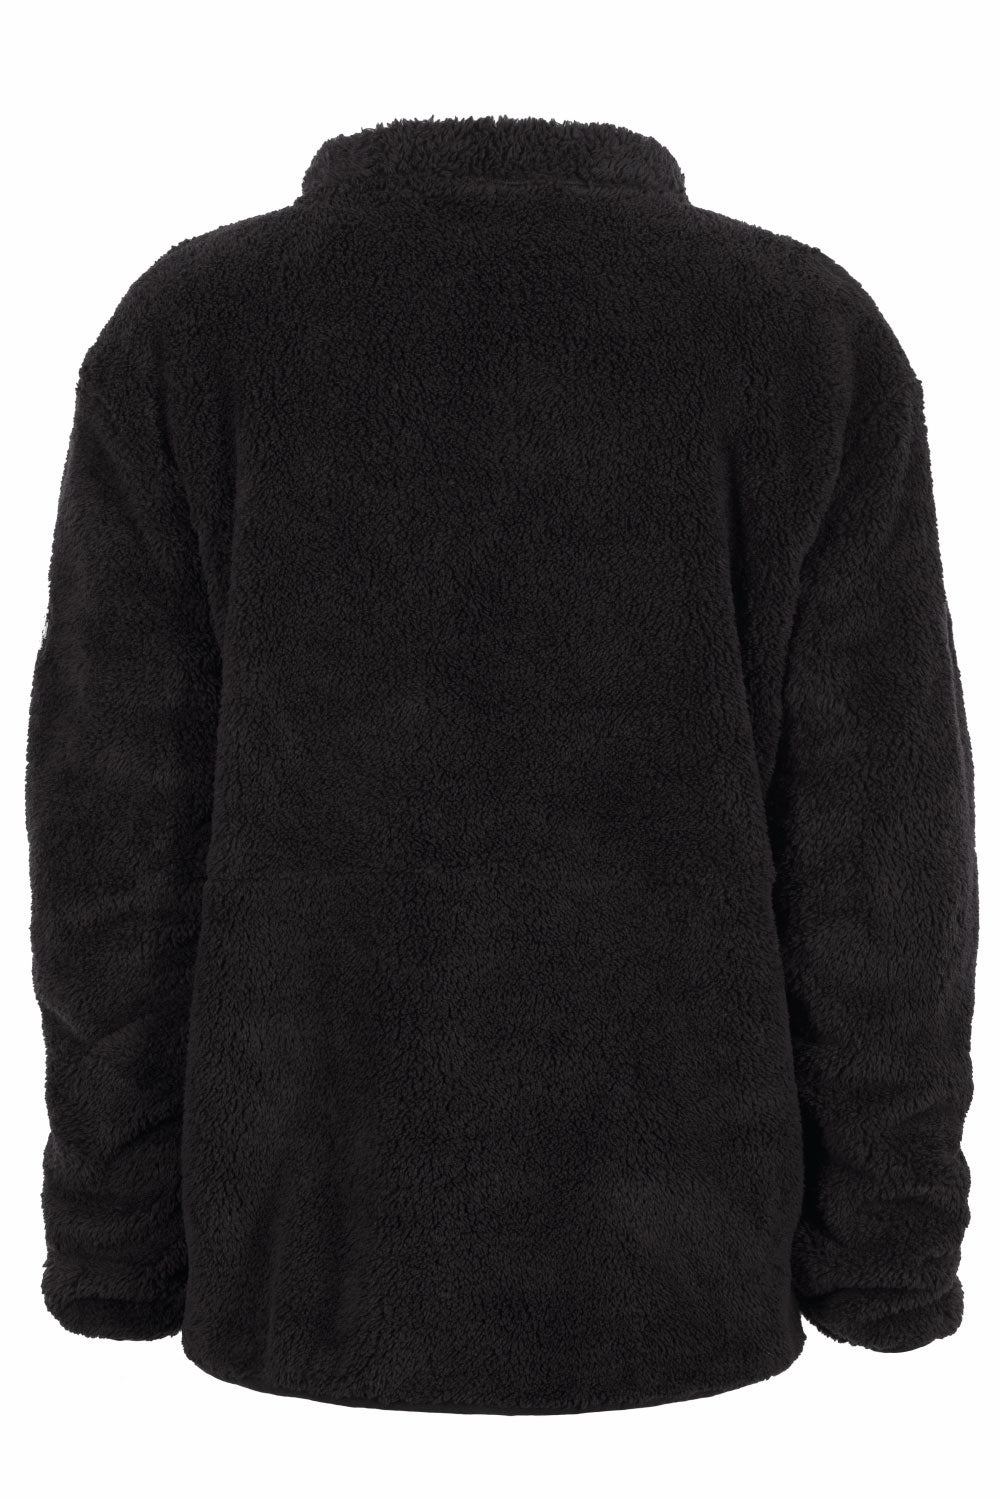 The Black Yeti Fleece (Women's)